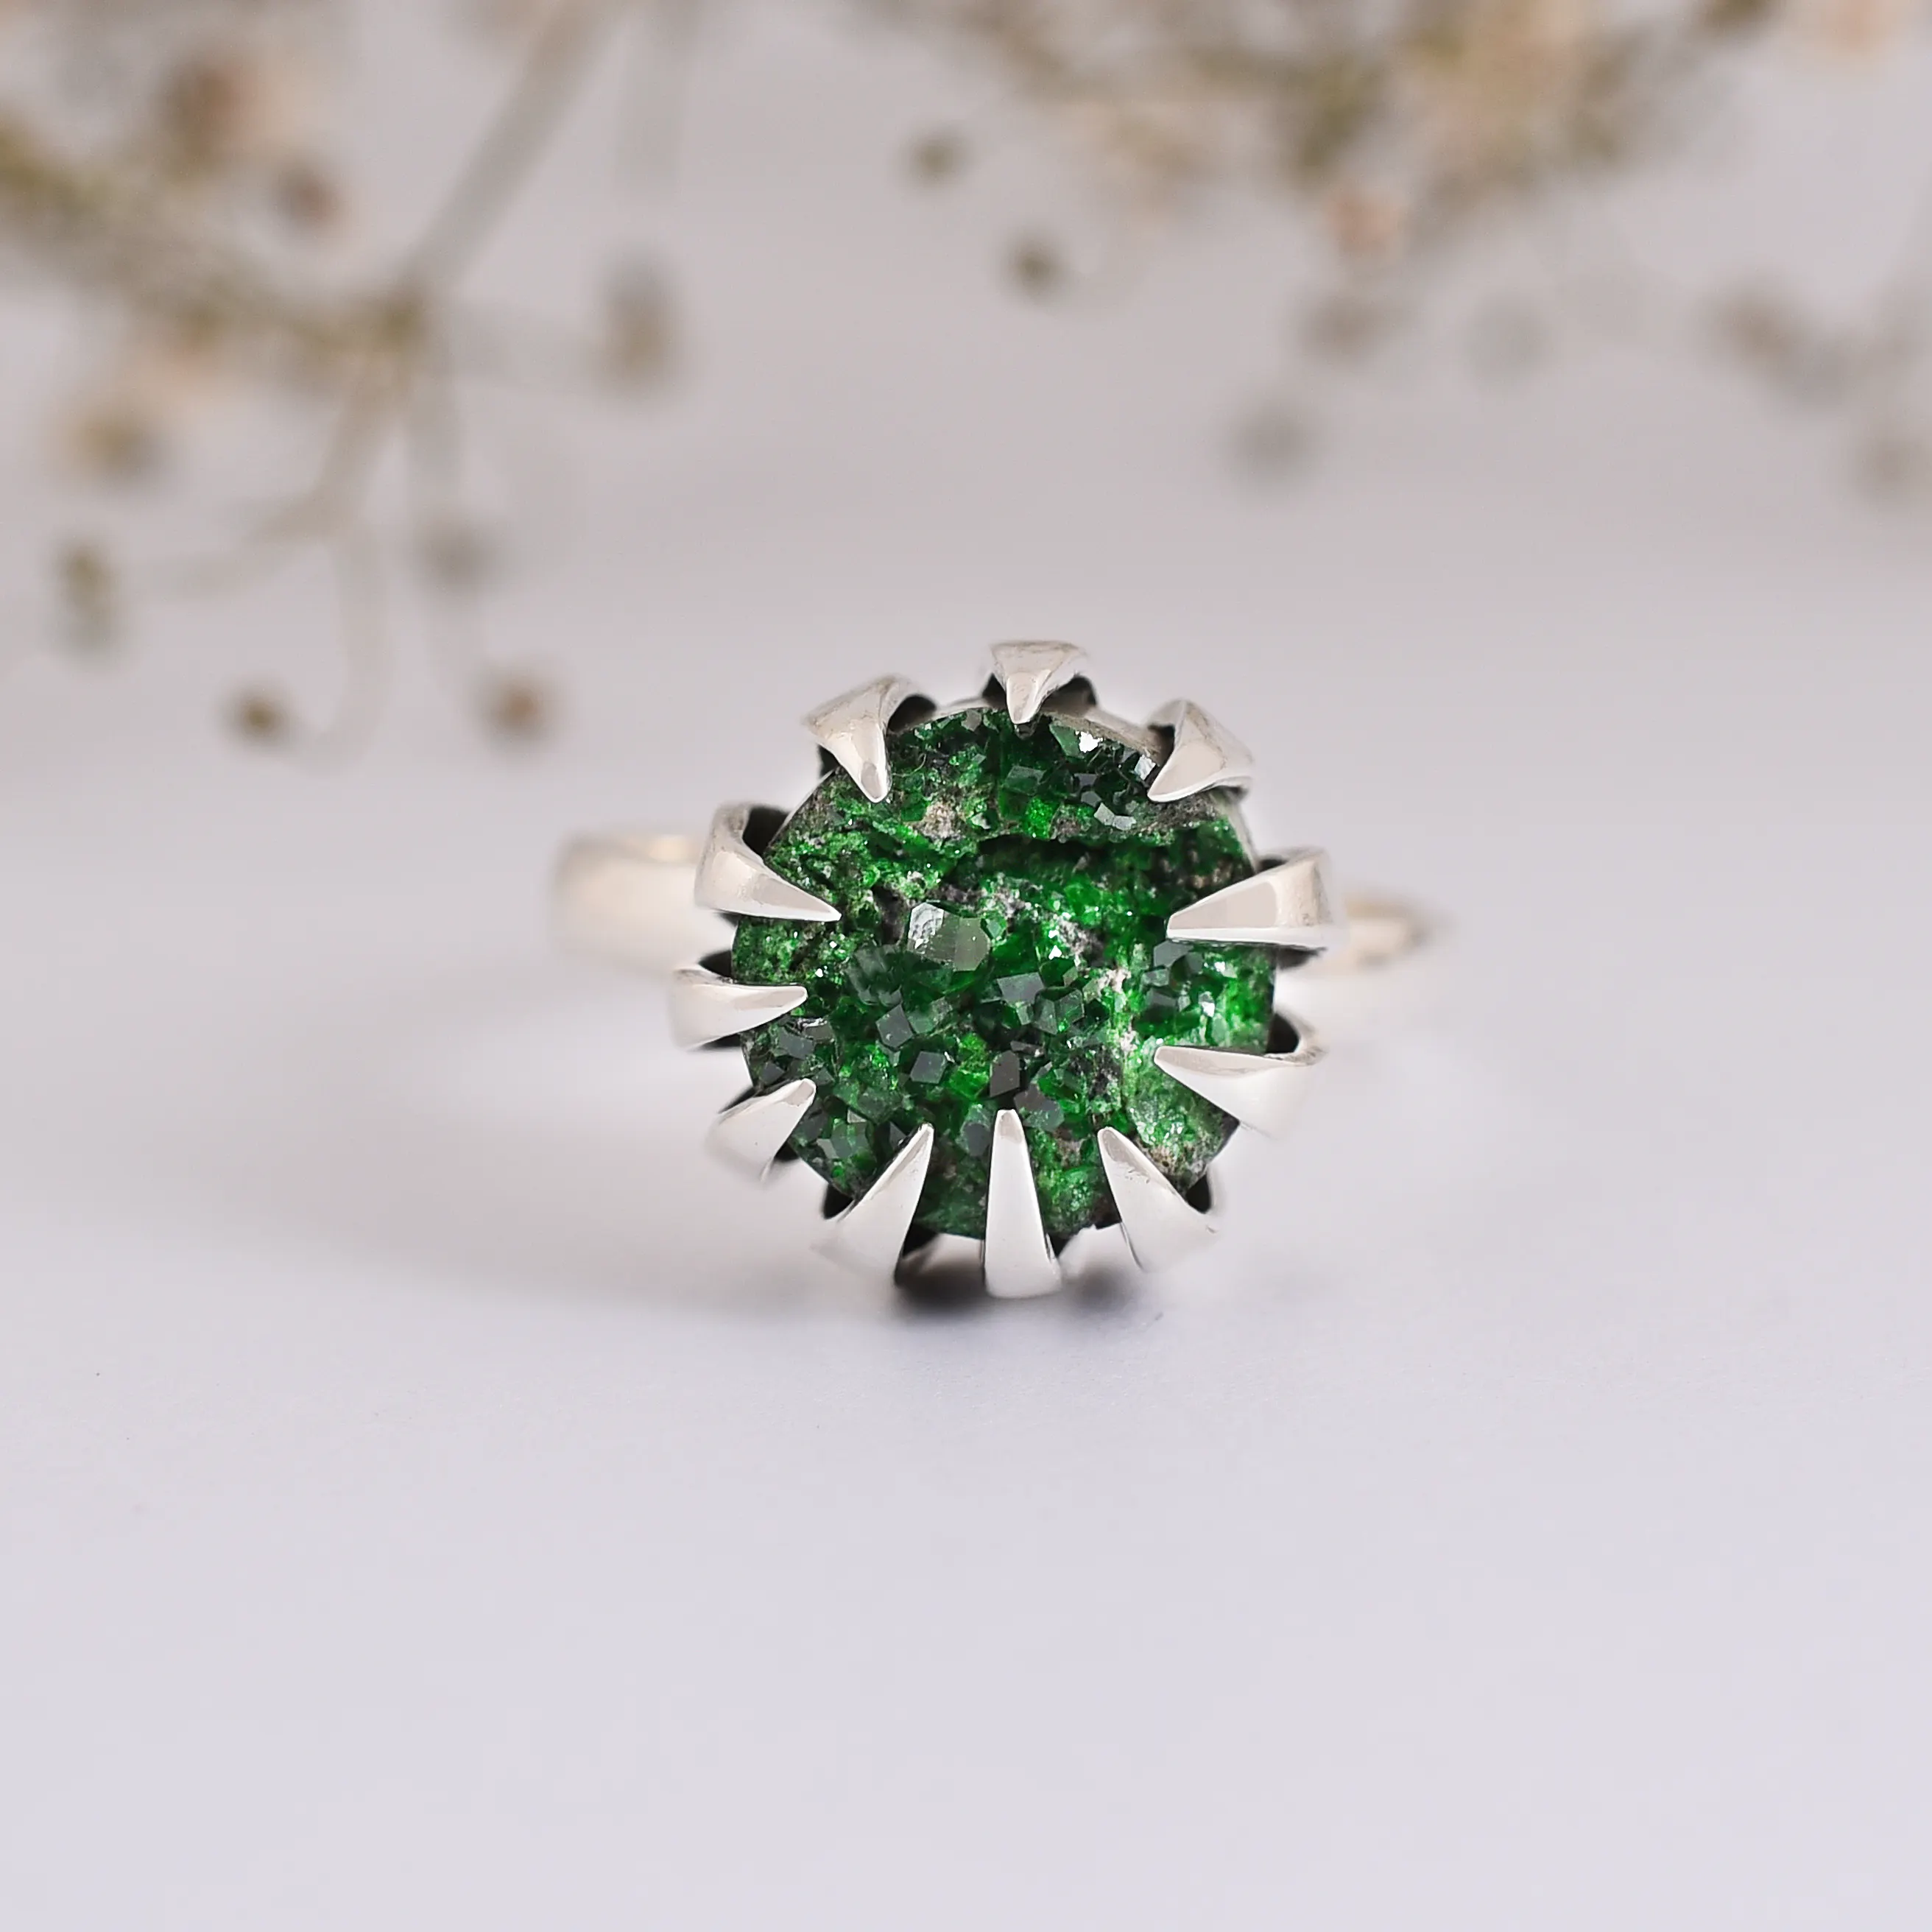 Uvarovite 925 स्टर्लिंग चांदी रेट्रो रत्न की अंगूठी मिठाइयां दौर प्राकृतिक हरी रत्न की अंगूठी प्राकृतिक रत्न की अंगूठी हस्तनिर्मित ज्वेल्स